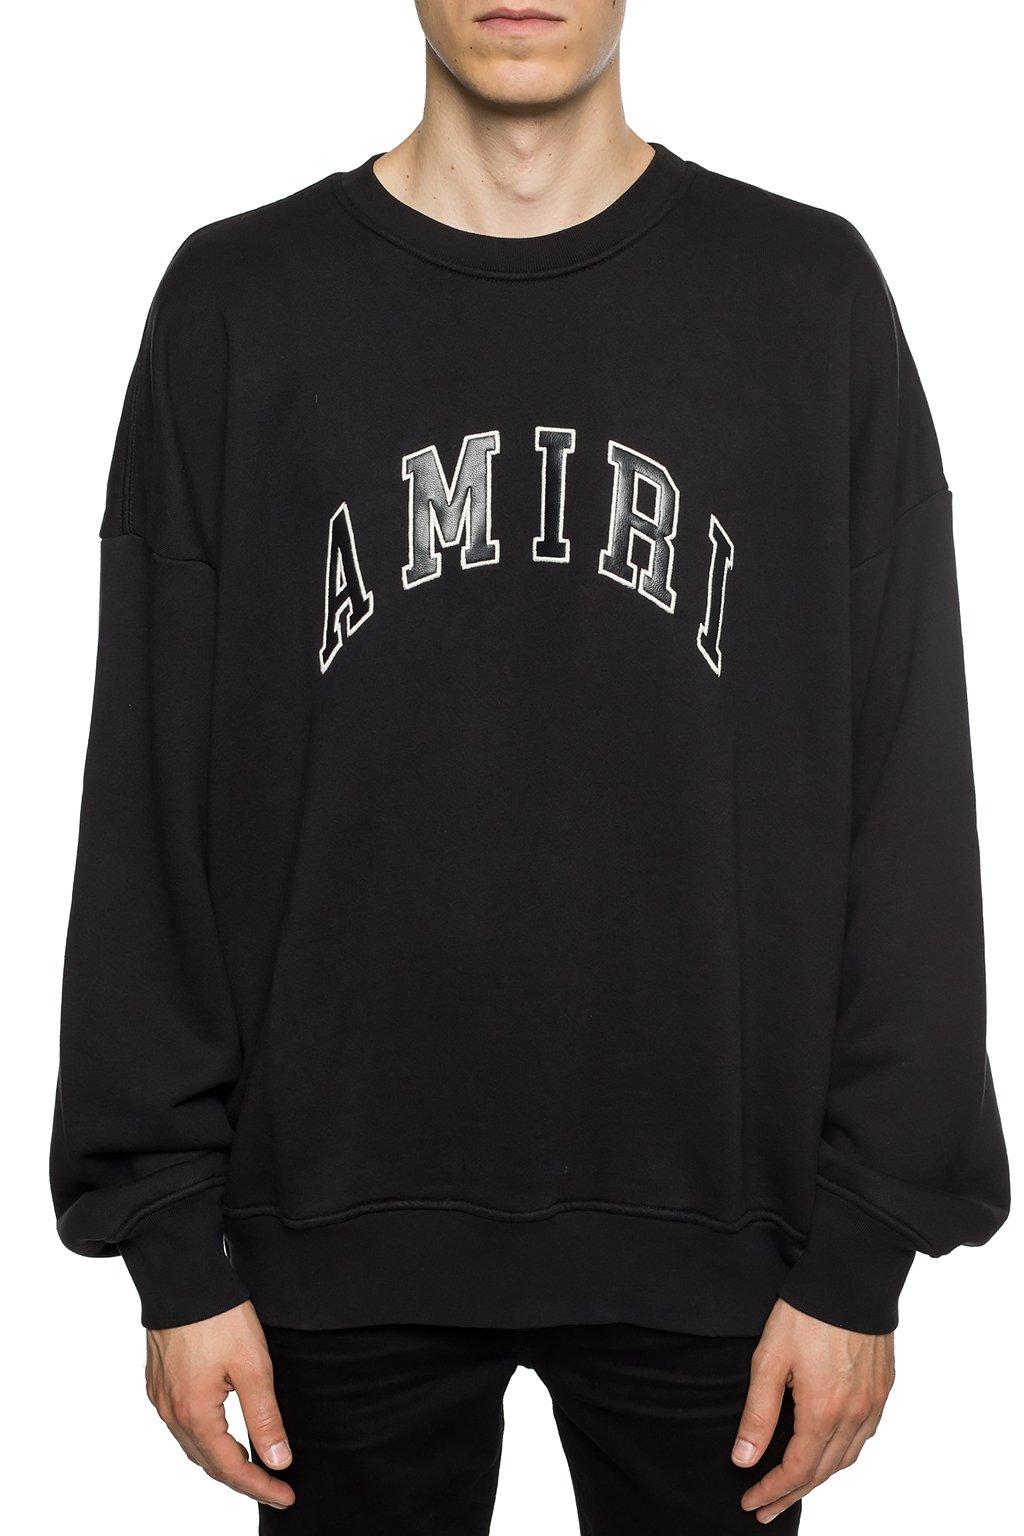 Amiri Cotton Logo-embroidered Sweatshirt in Black for Men - Lyst